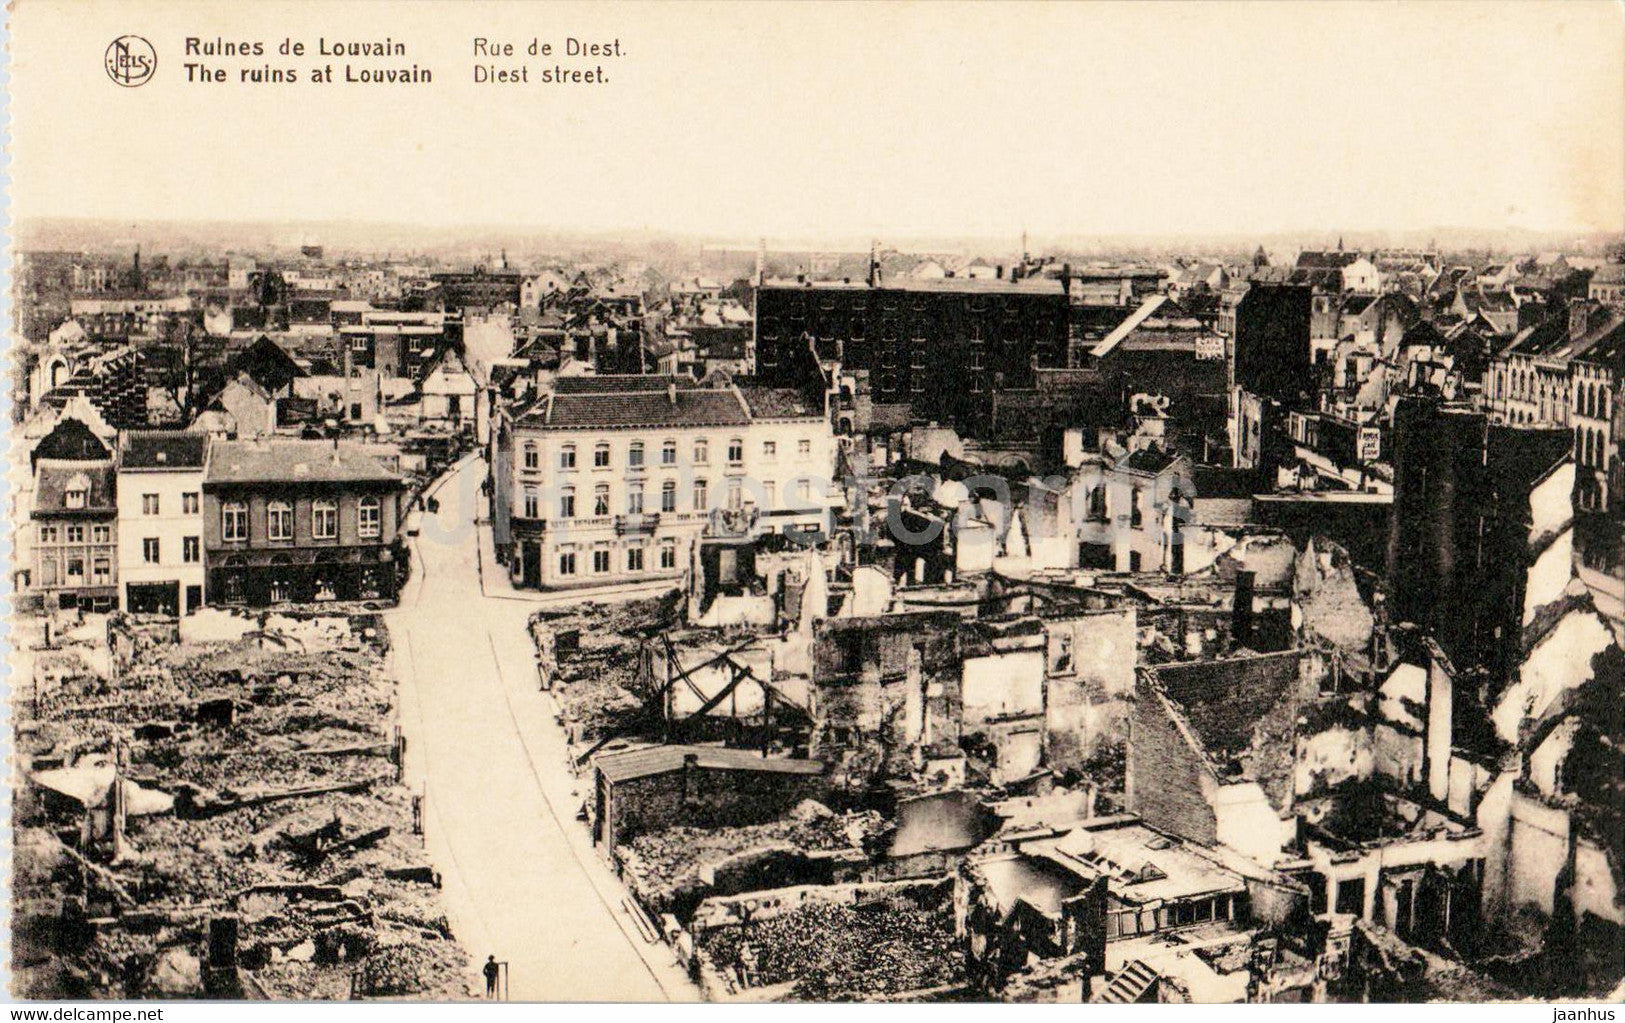 Ruines de Louvain - Rue de Diest - Diest street - WWI - military - old postcard - Belgium - unused - JH Postcards